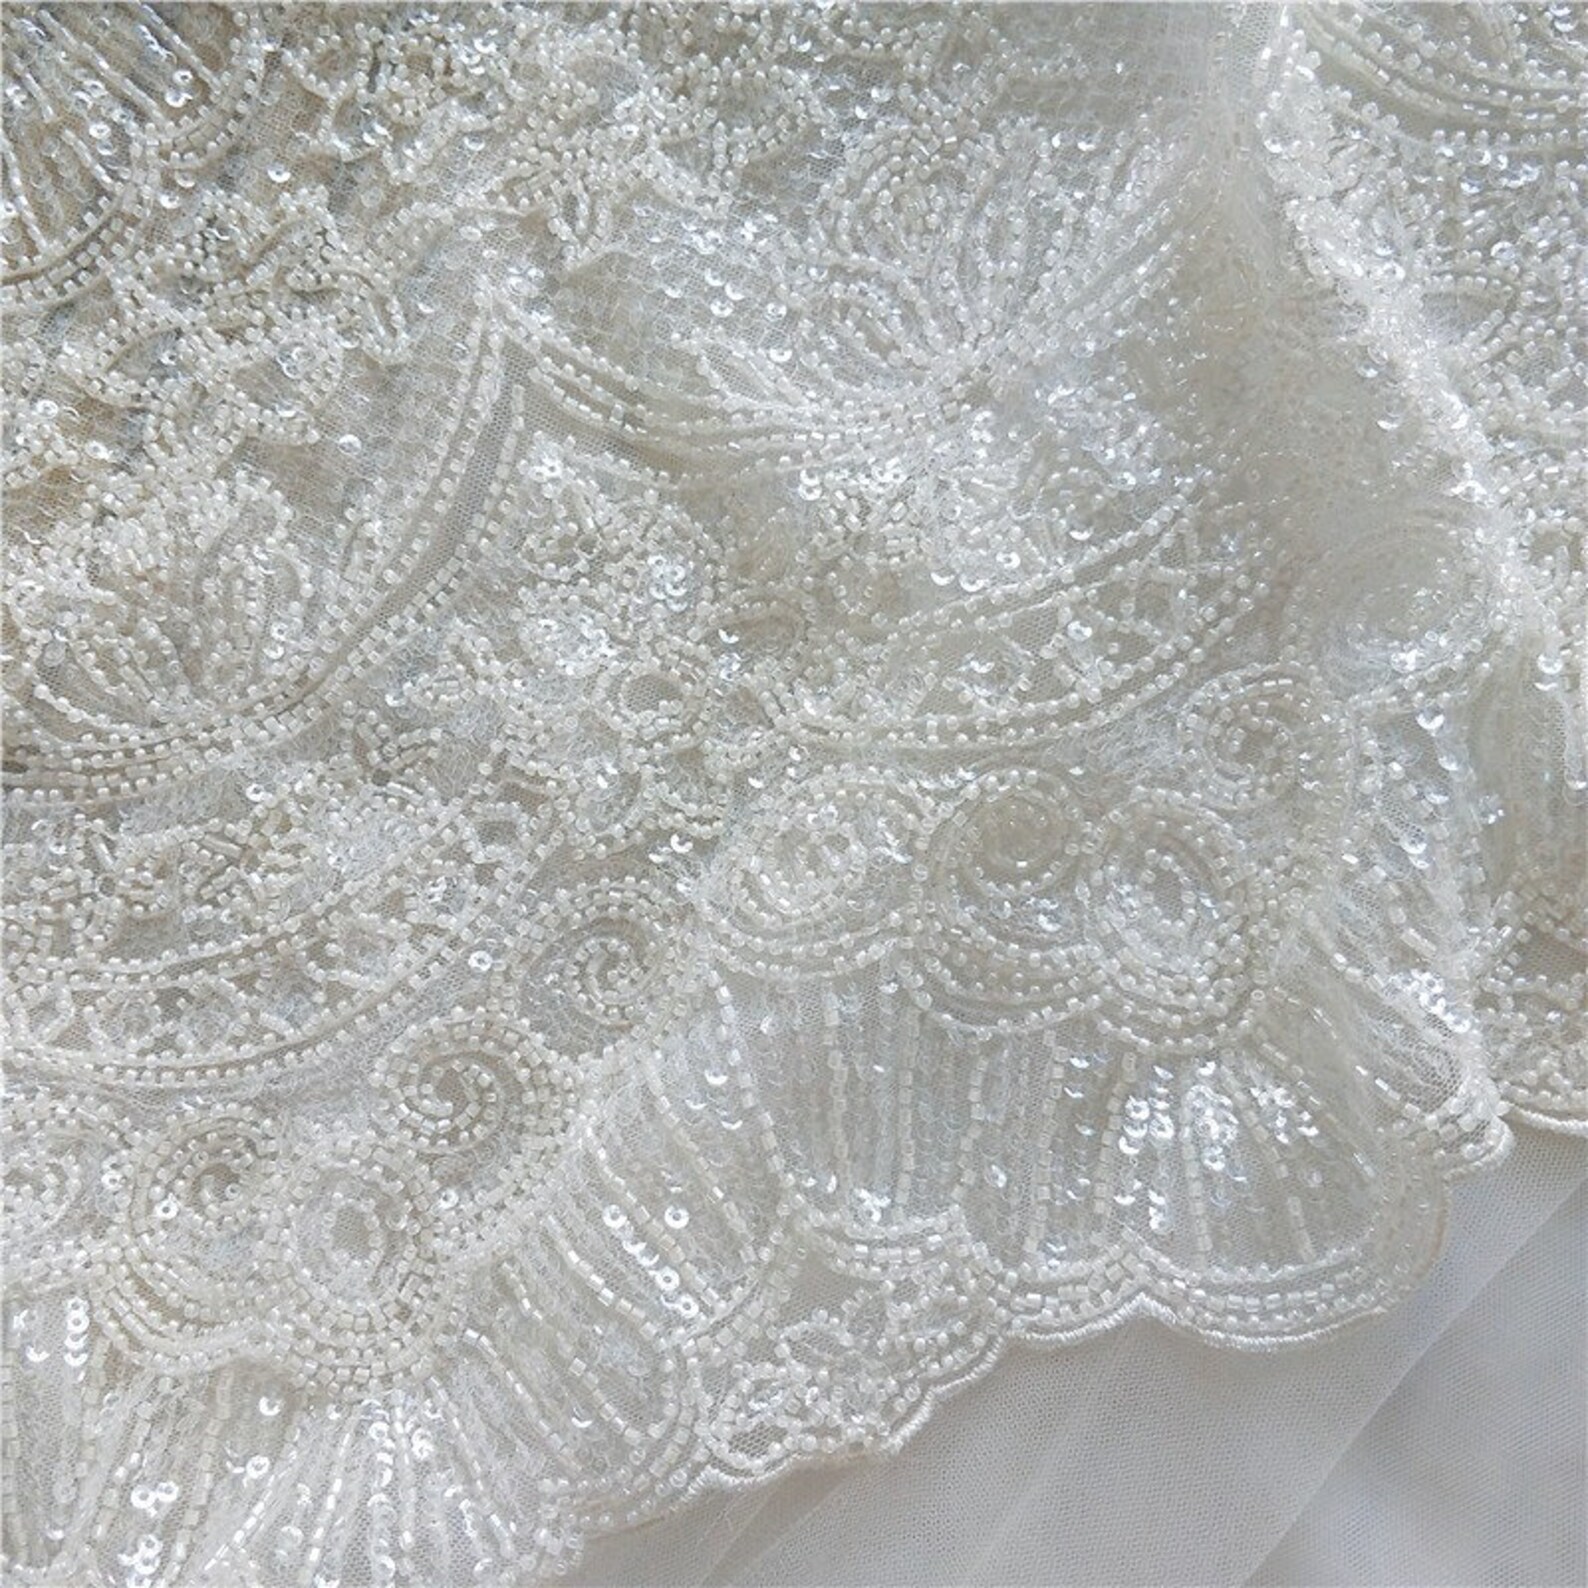 Luxury Heavy Beaded Bridal Lace Fabric Full Beaded Wedding | Etsy